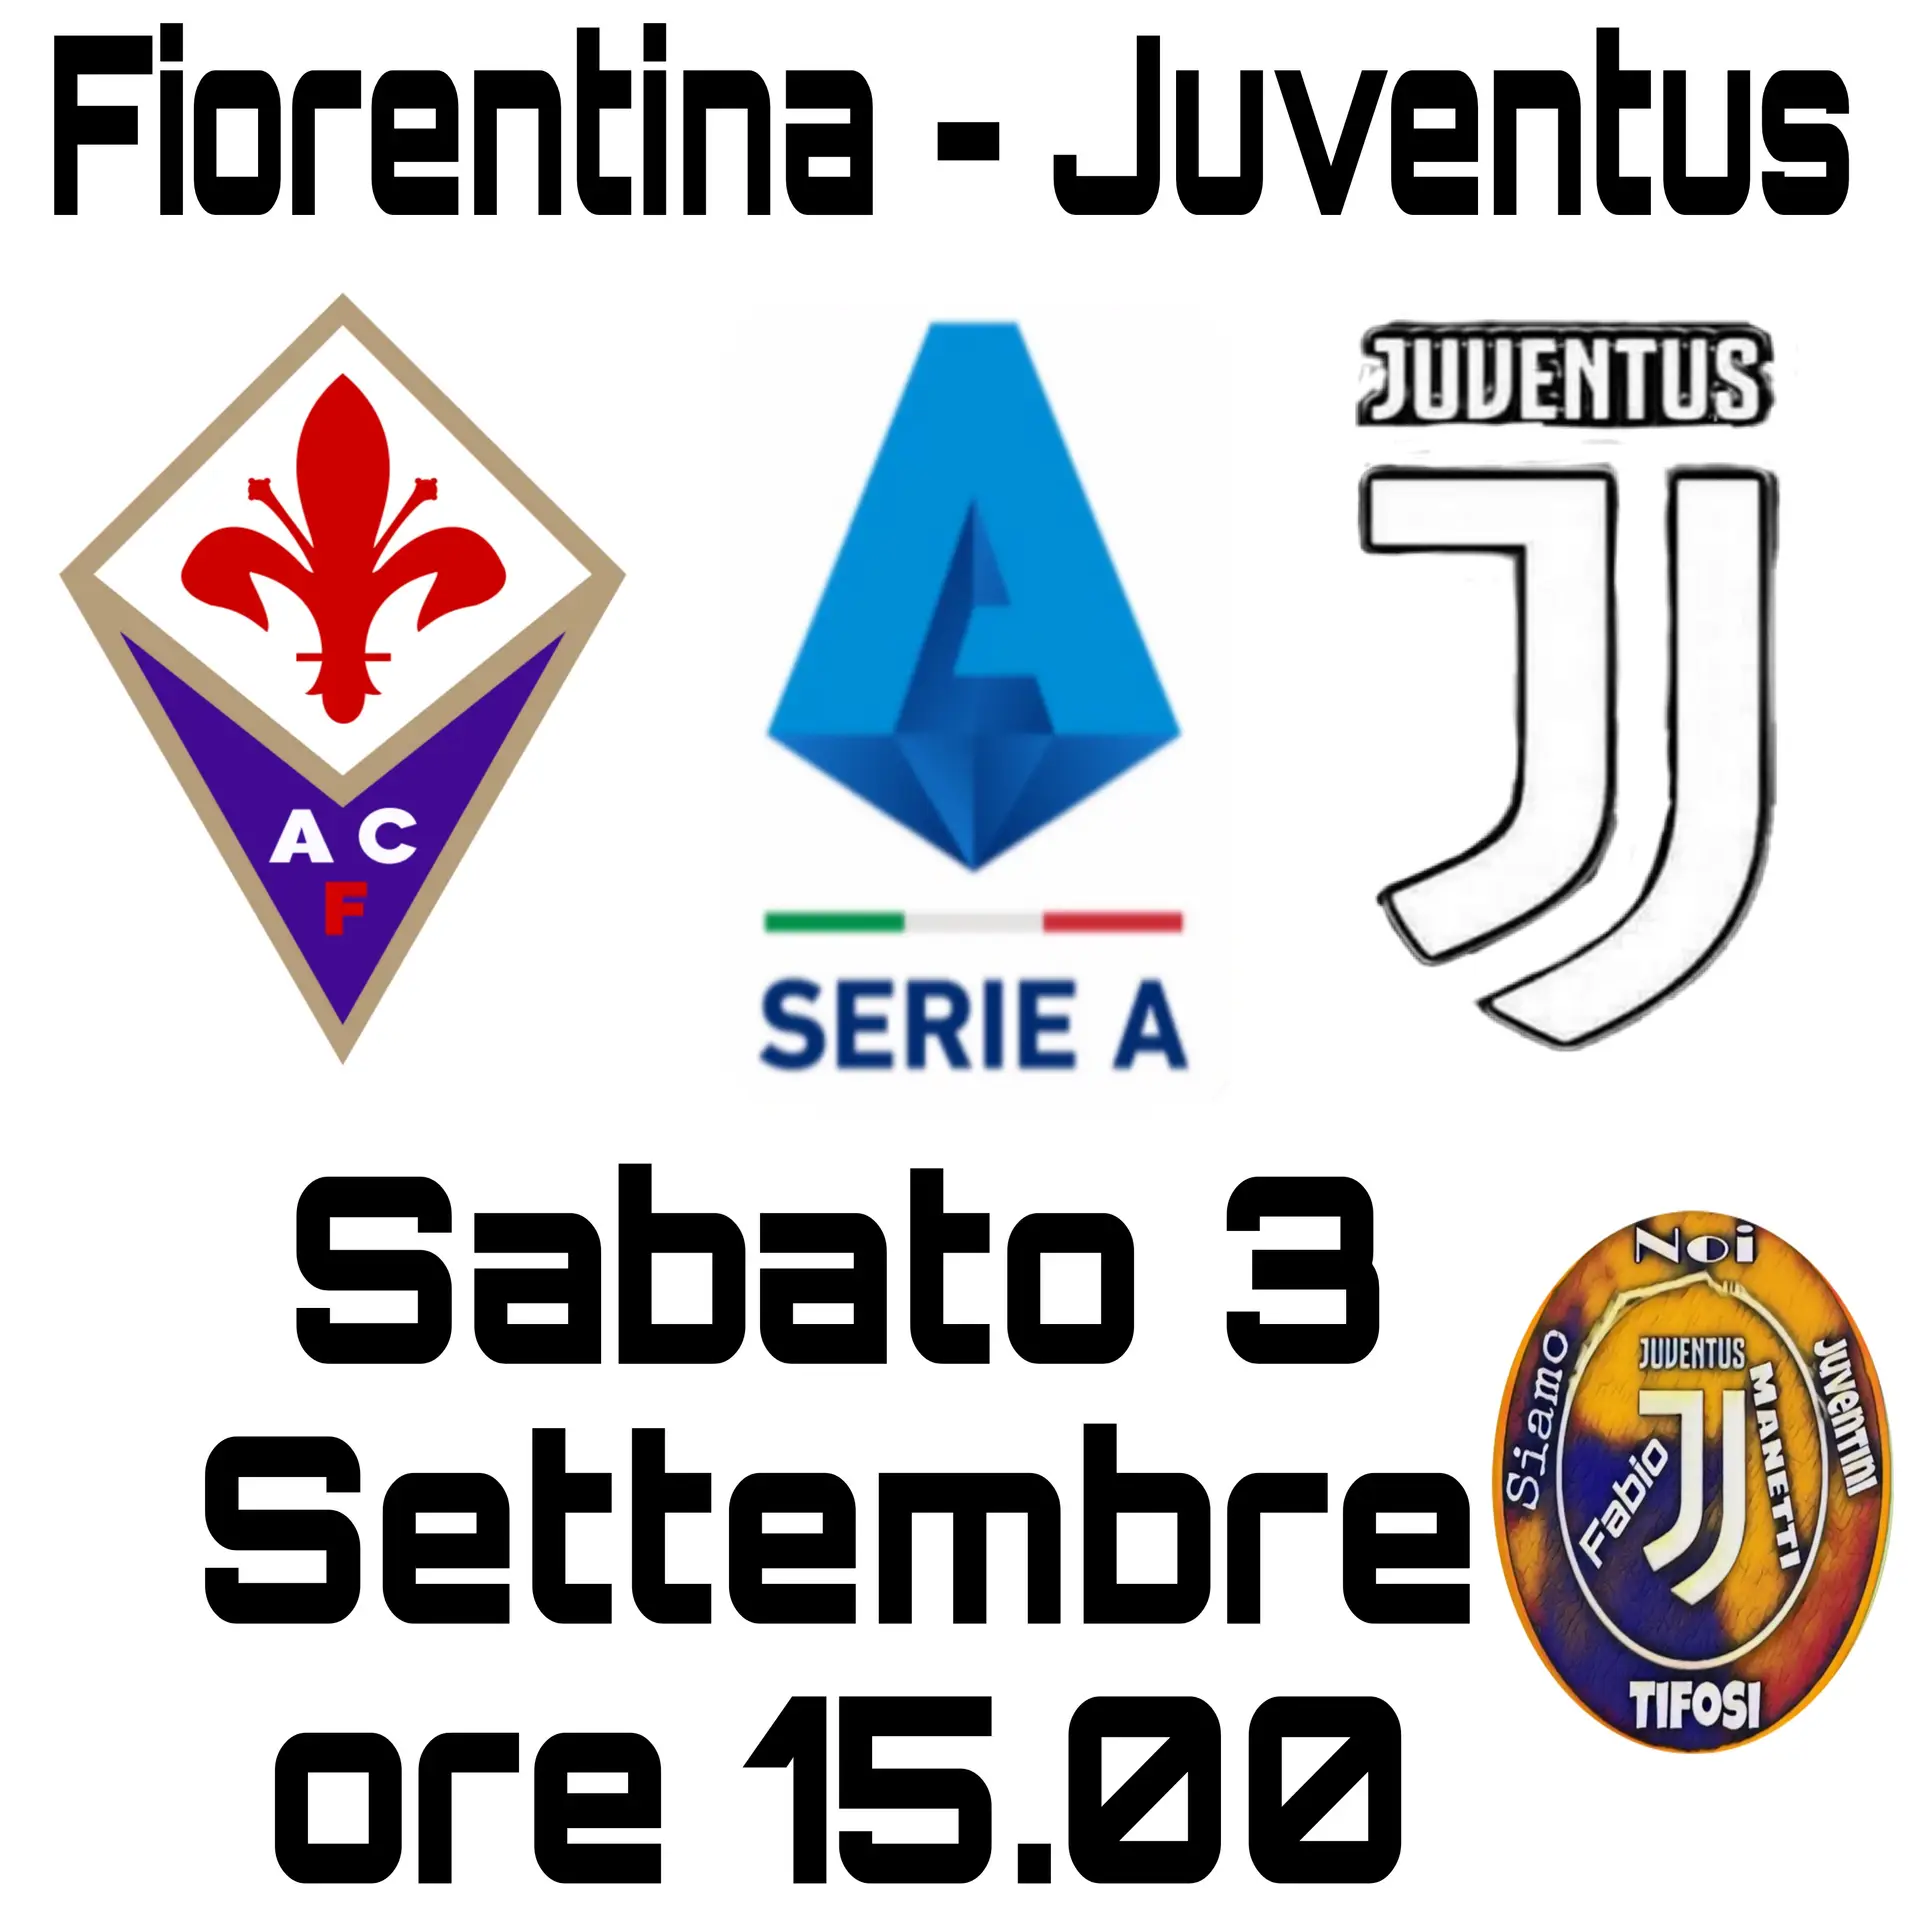 Fiorentina - Juventus Sabato 3 Settembre ore 15.00